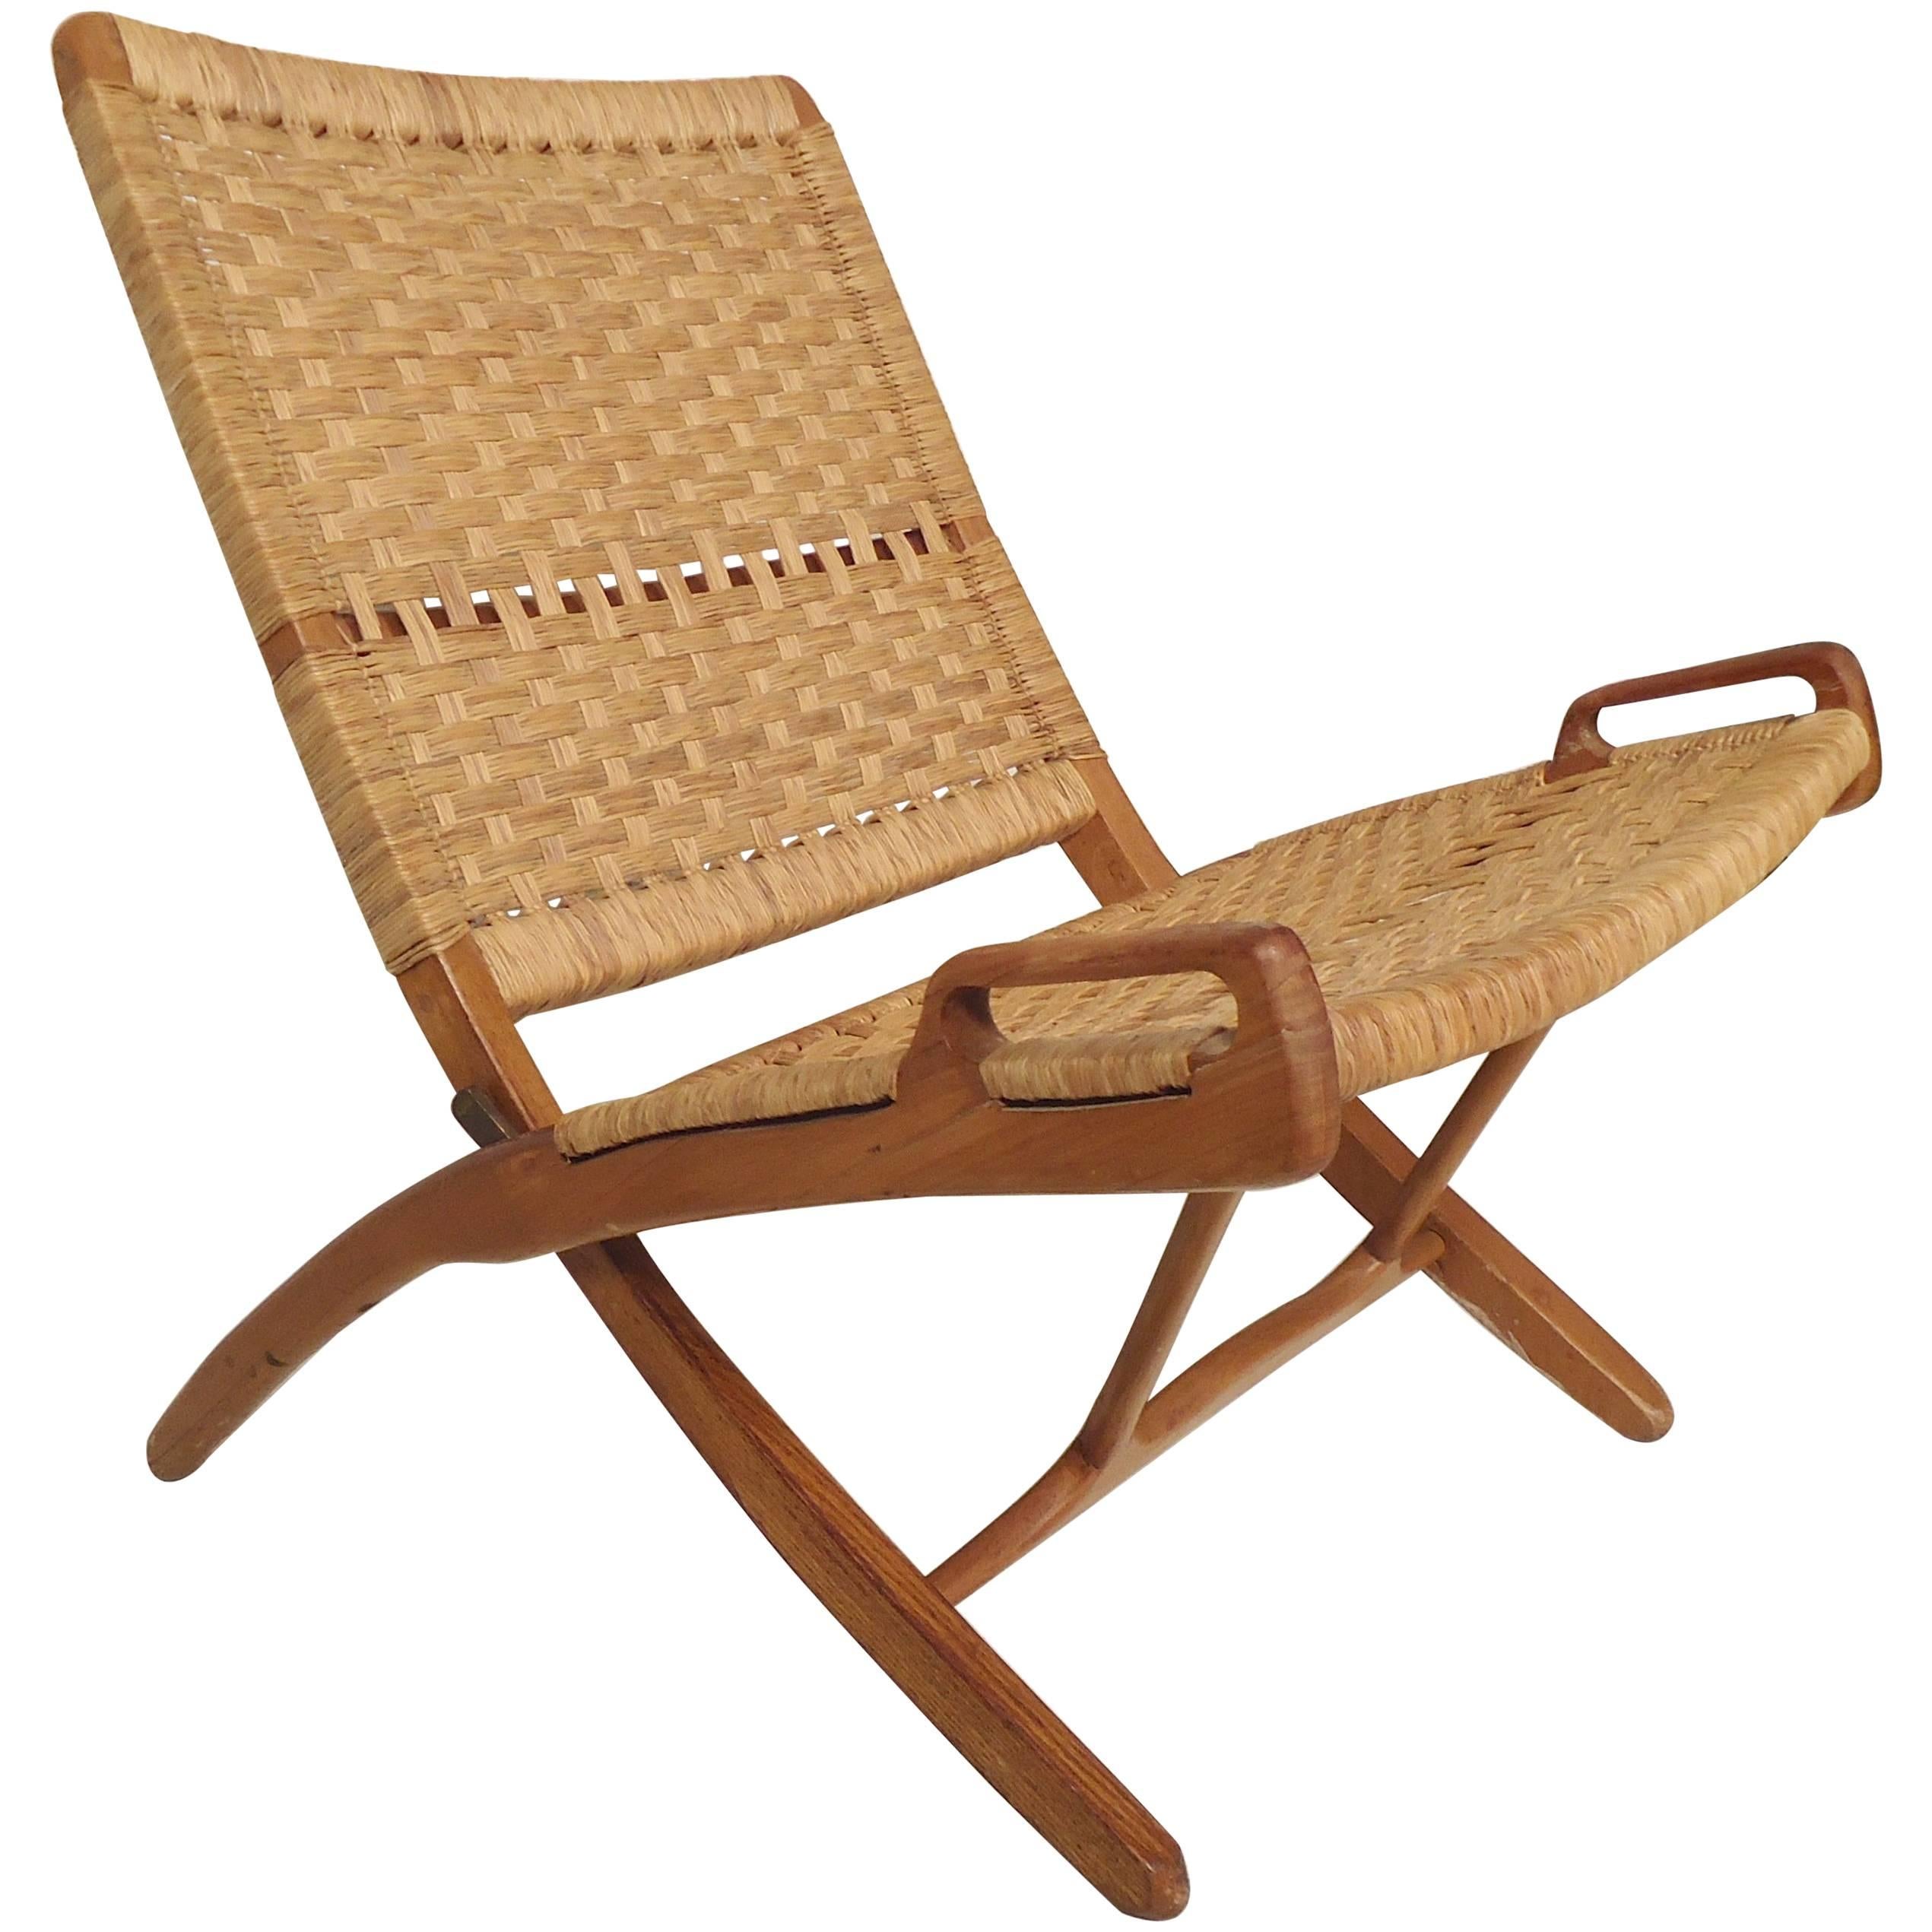 Hans Wegner Style Folding Chair